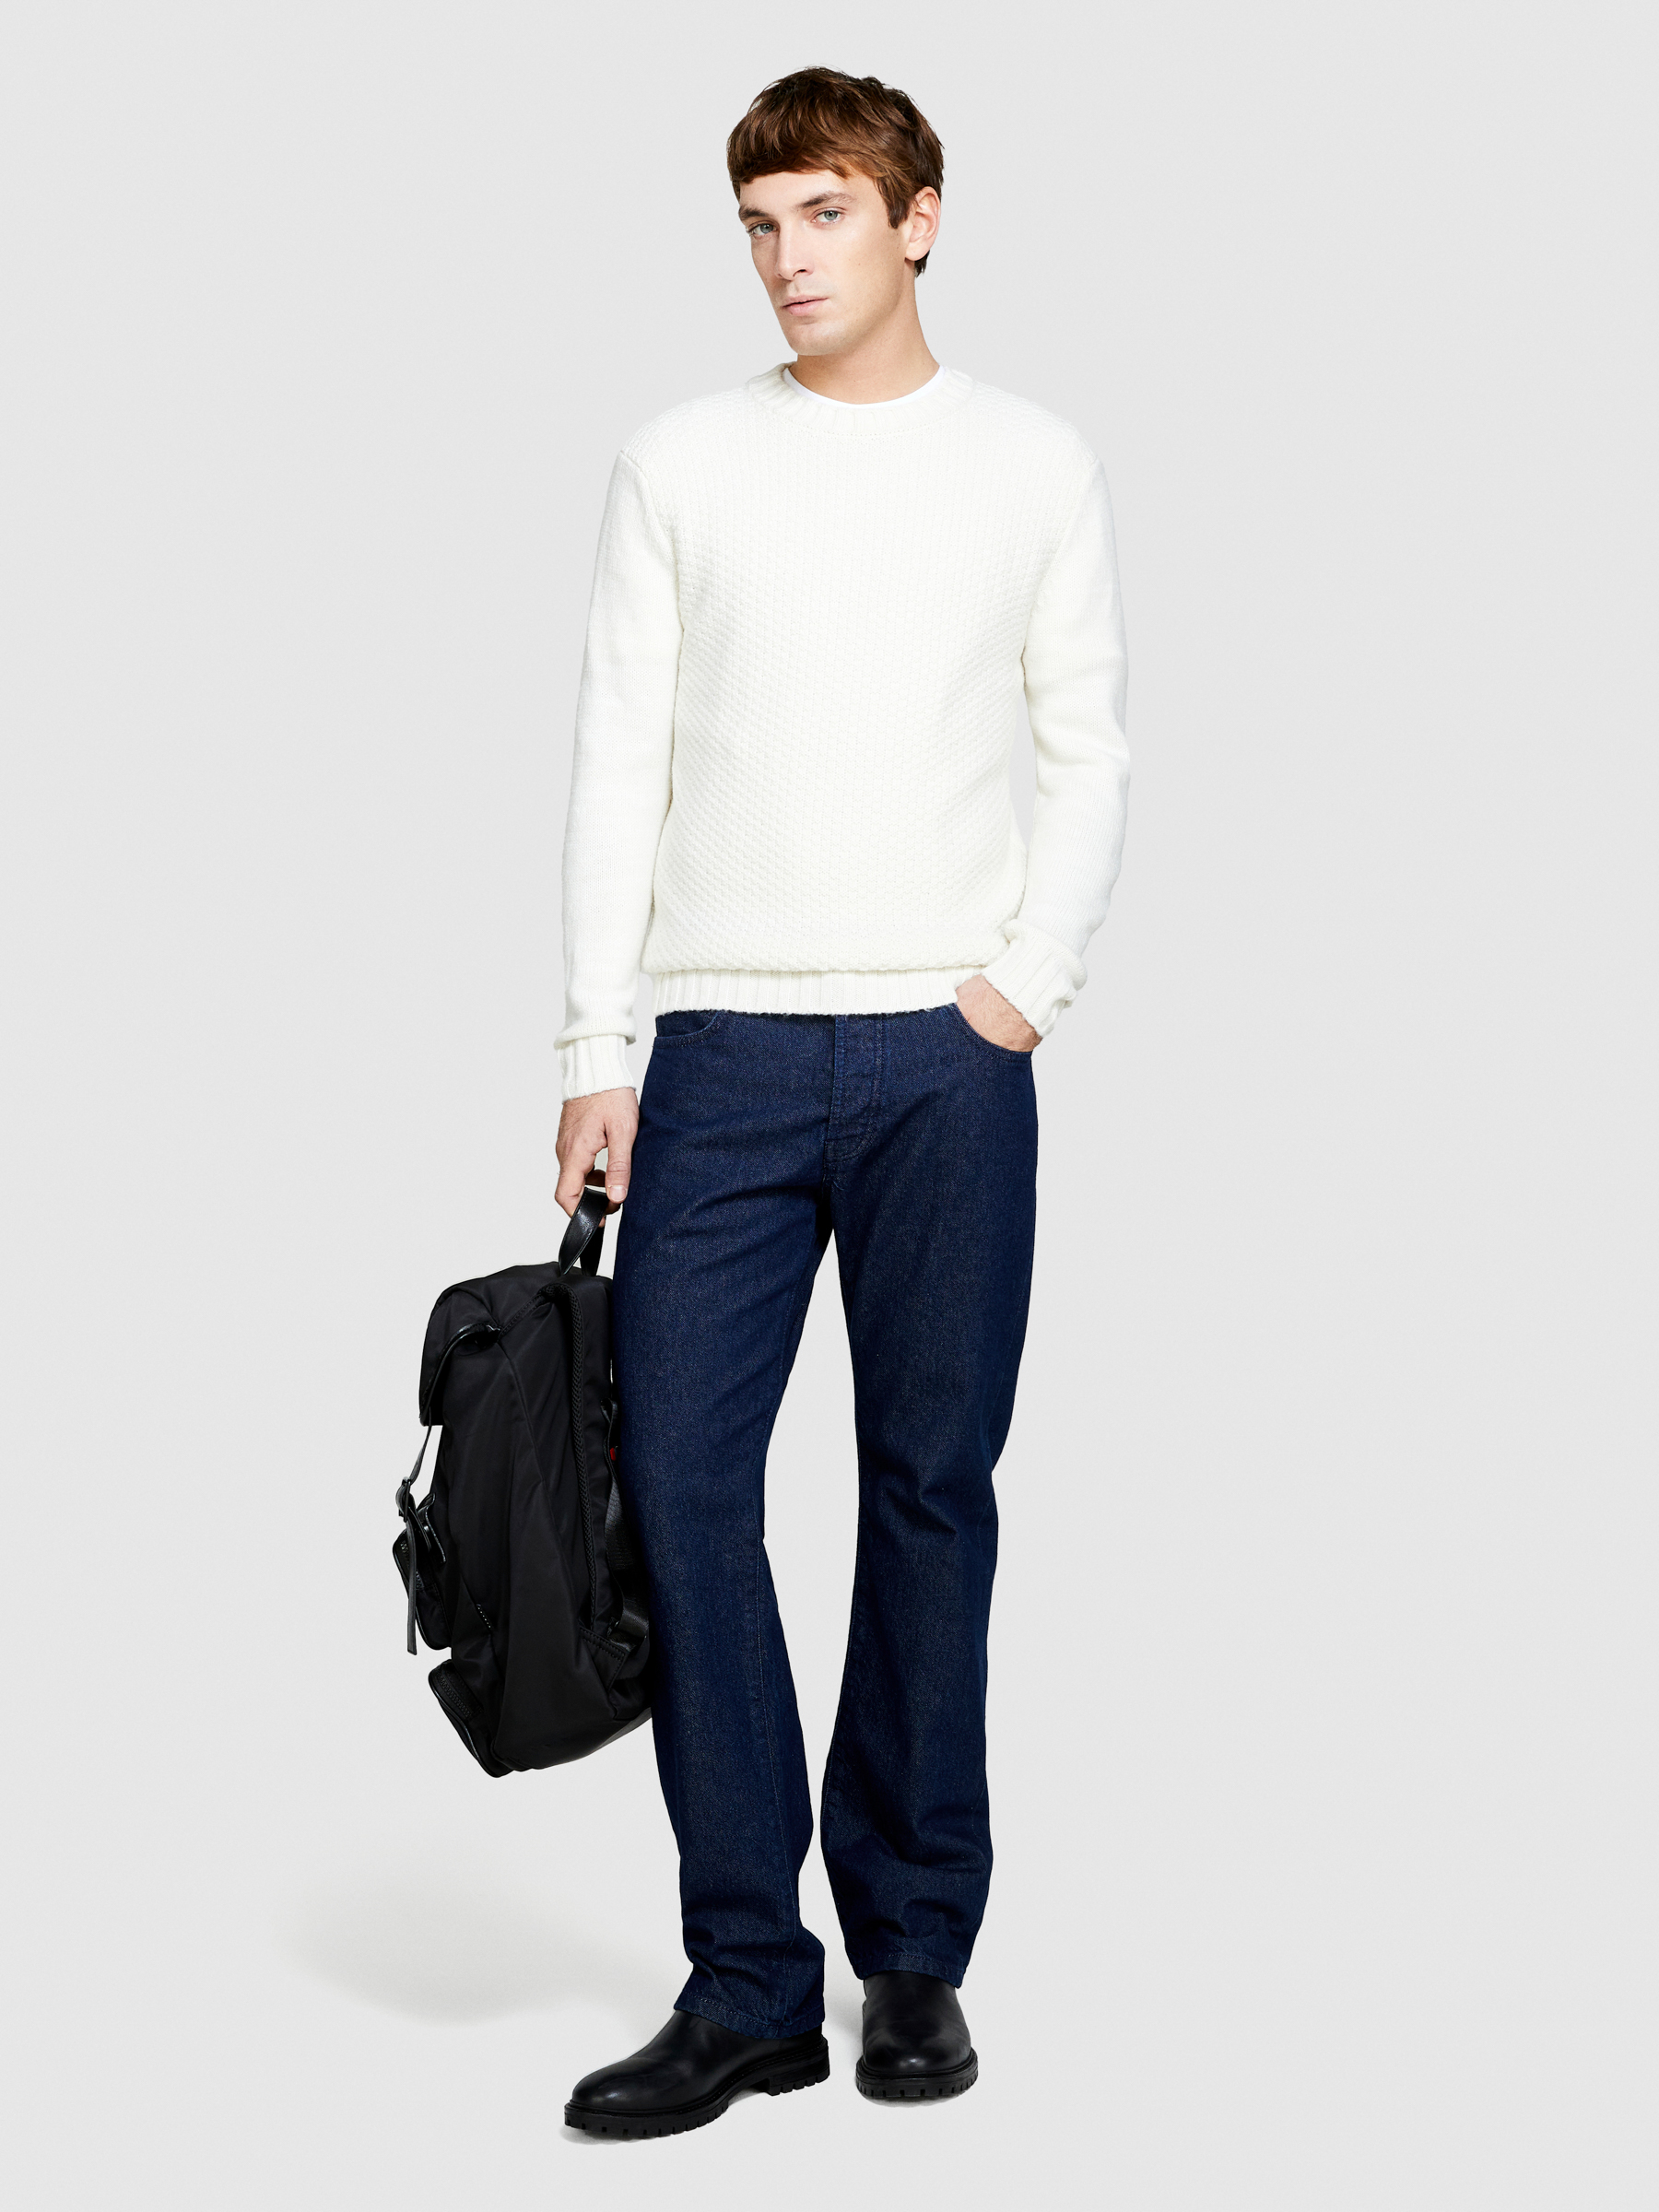 Sisley - Knit Sweater, Man, White, Size: M